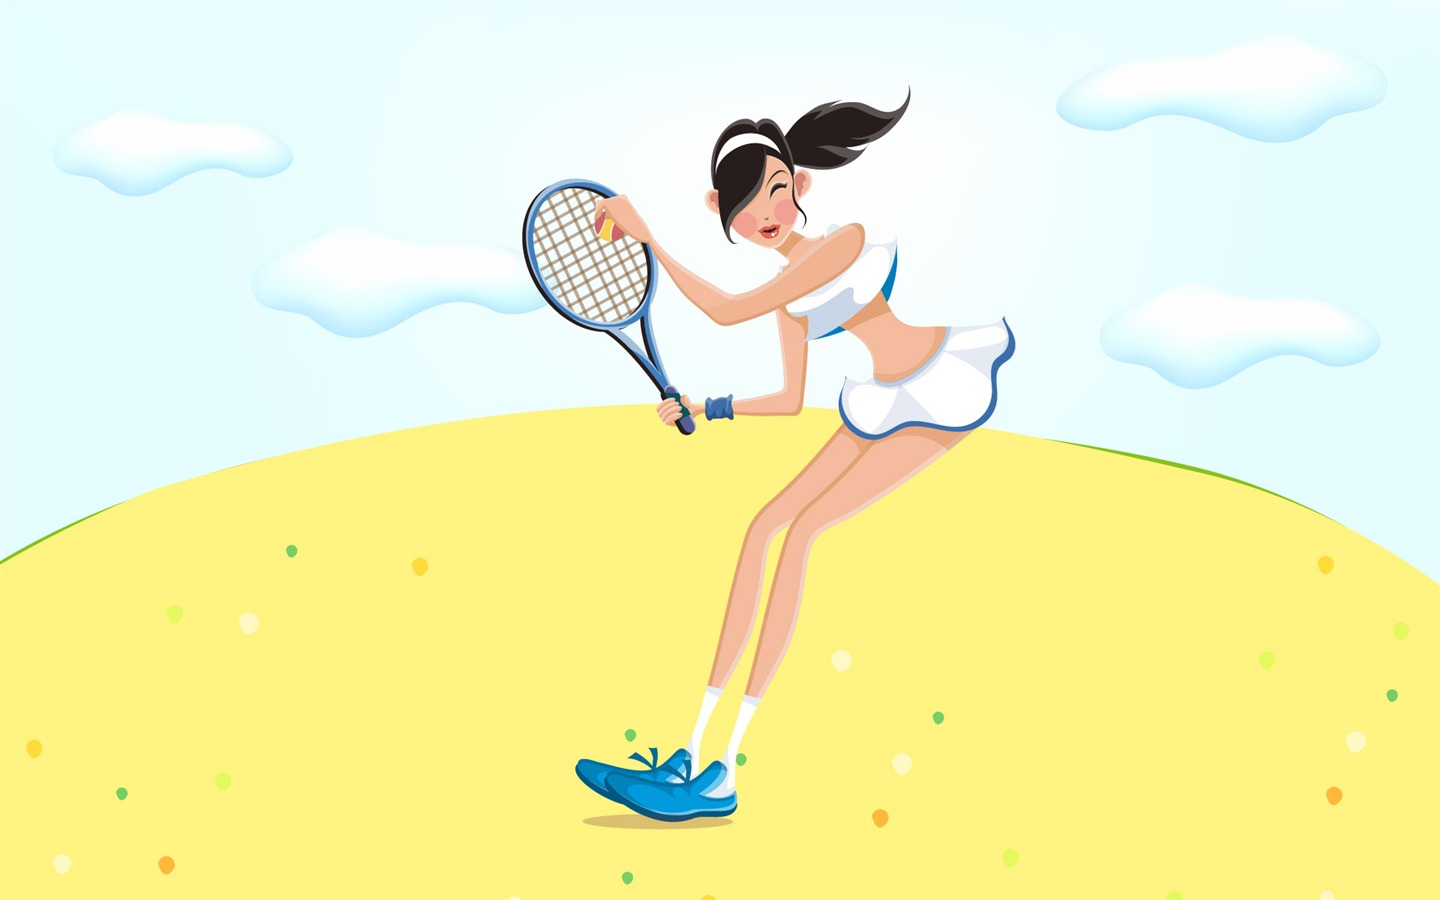 Women's leisure sports vector #13 - 1440x900